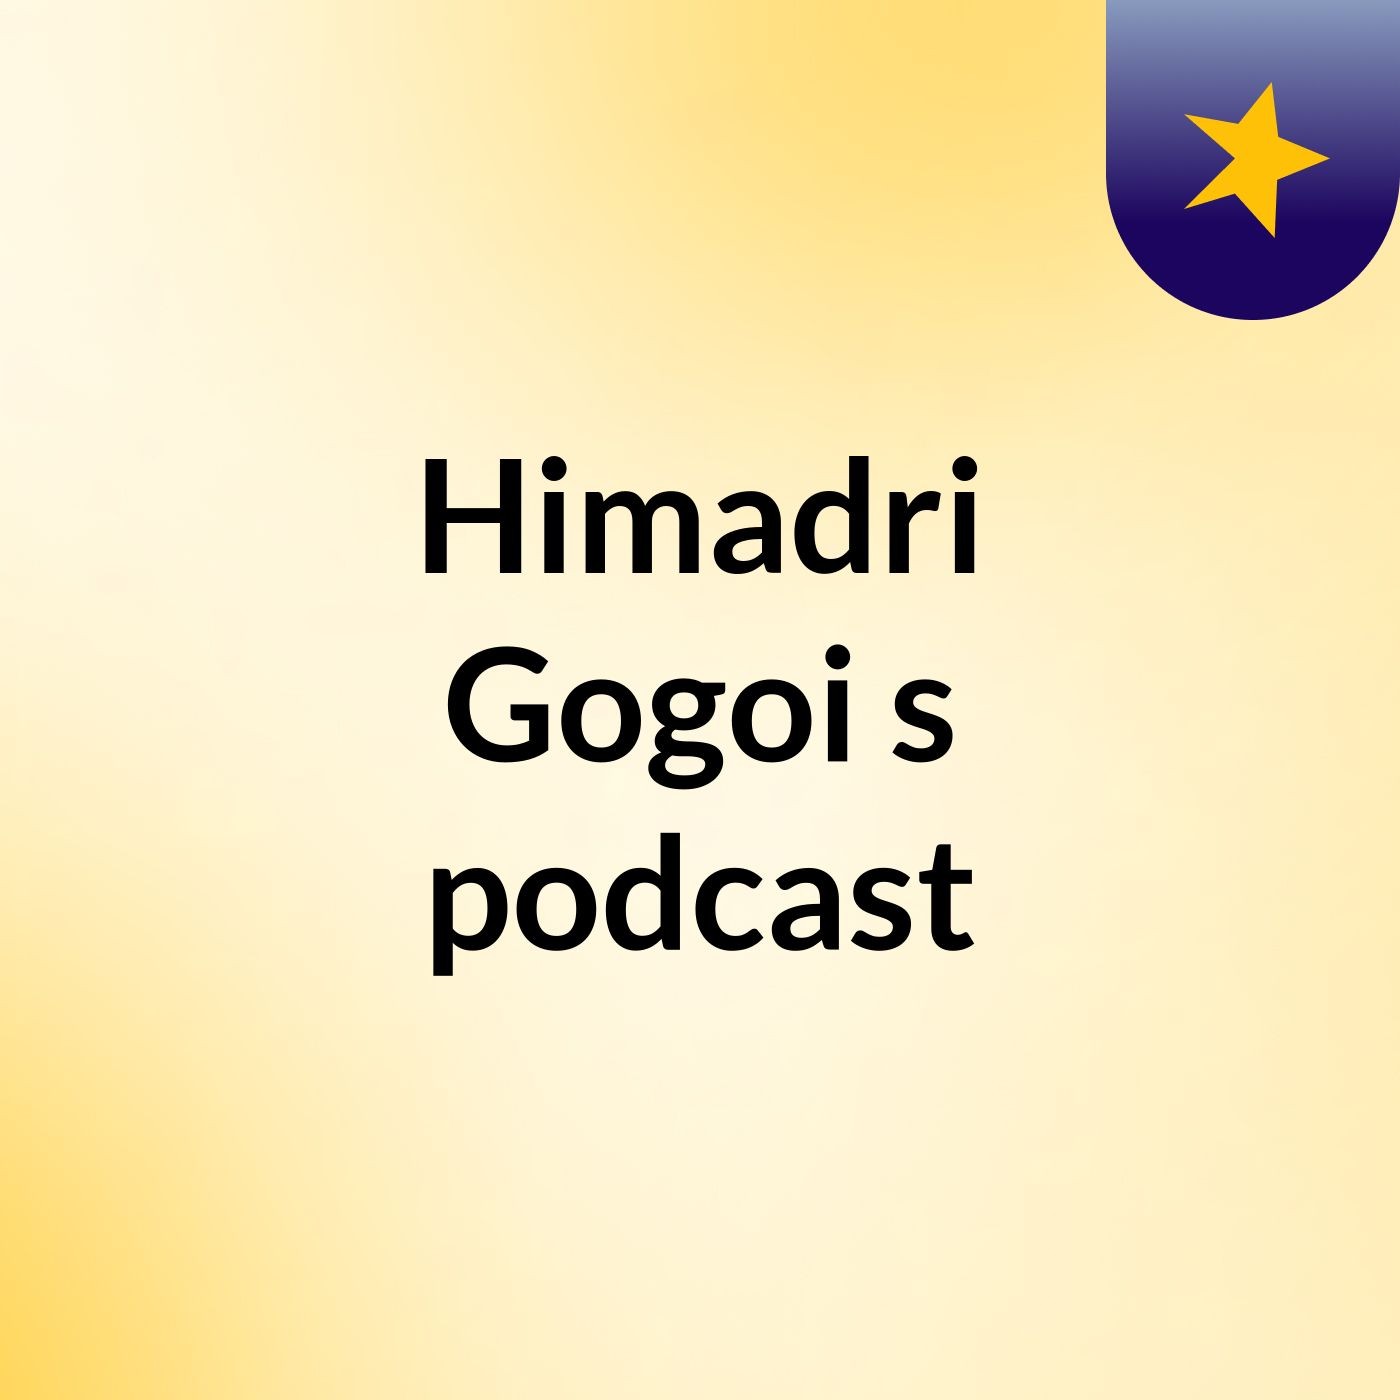 Himadri Gogoi's podcast